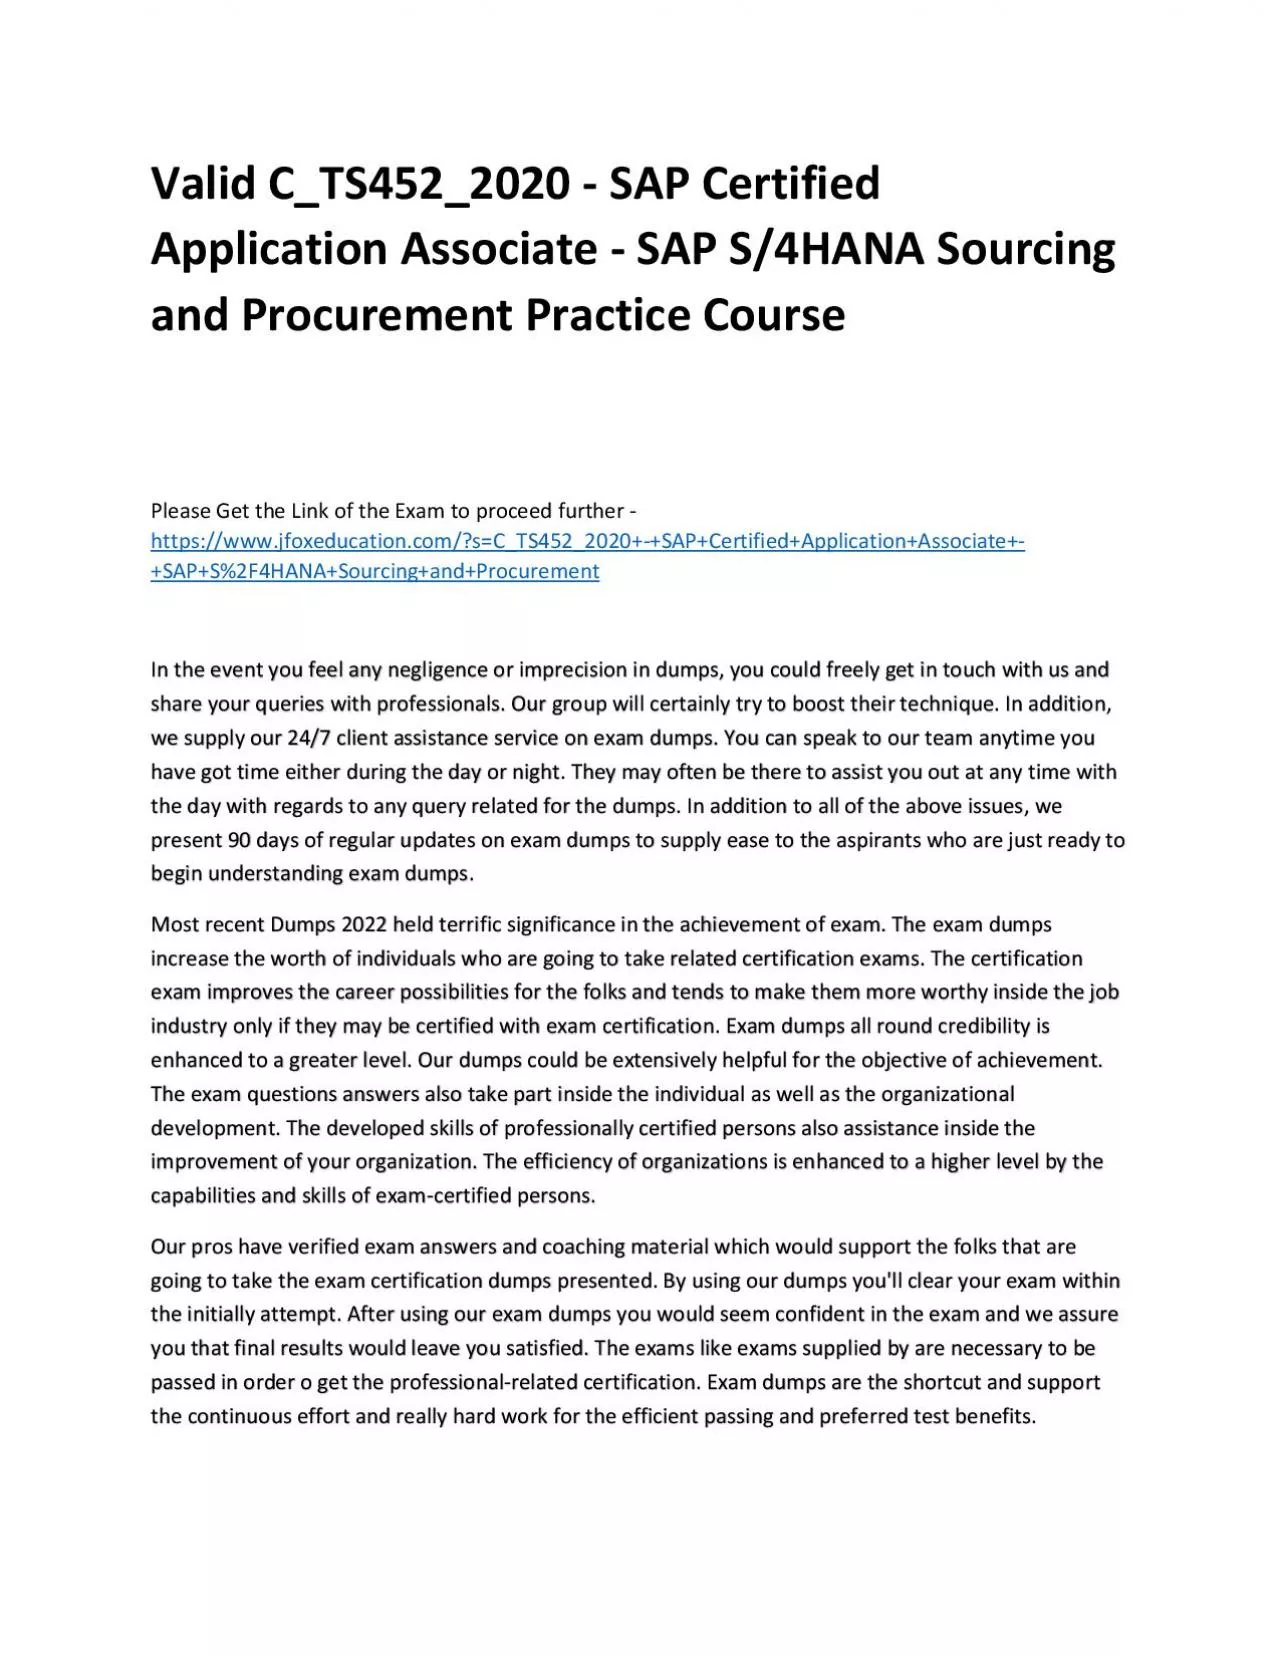 Valid C_TS452_2020 - SAP Certified Application Associate - SAP S/4HANA Sourcing and Procurement